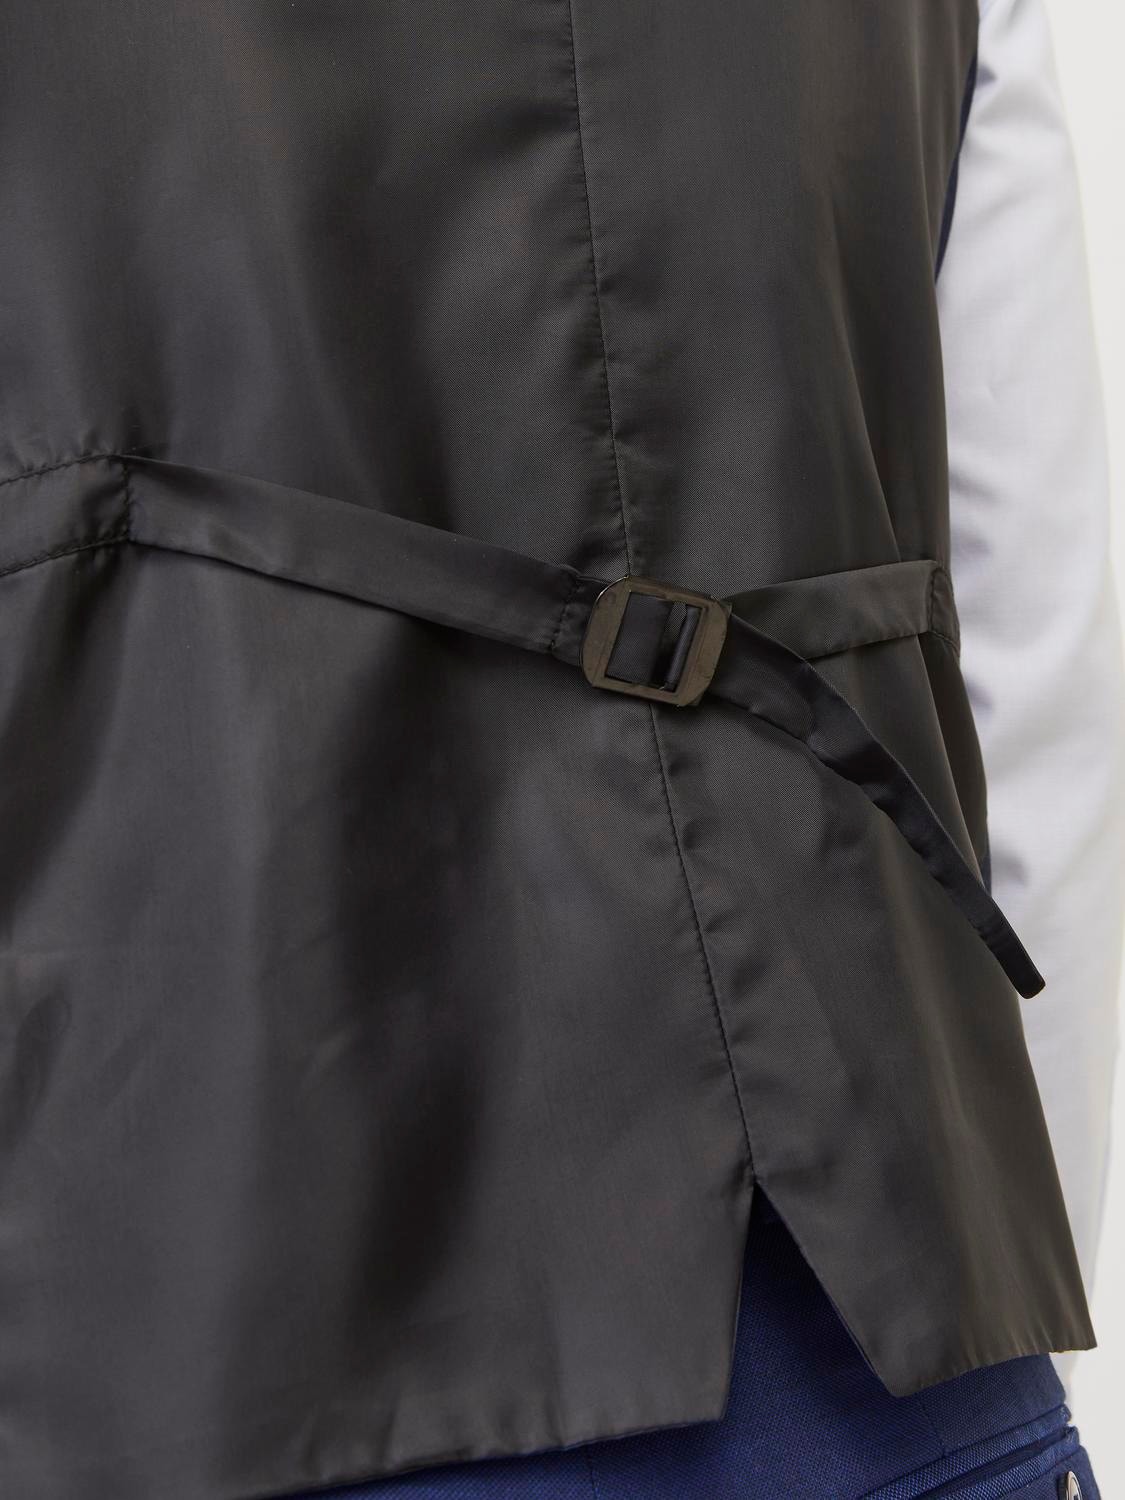 Jack & Jones JPRSOLARIS Slim Fit Tailored vest -Dark Navy - 12141110